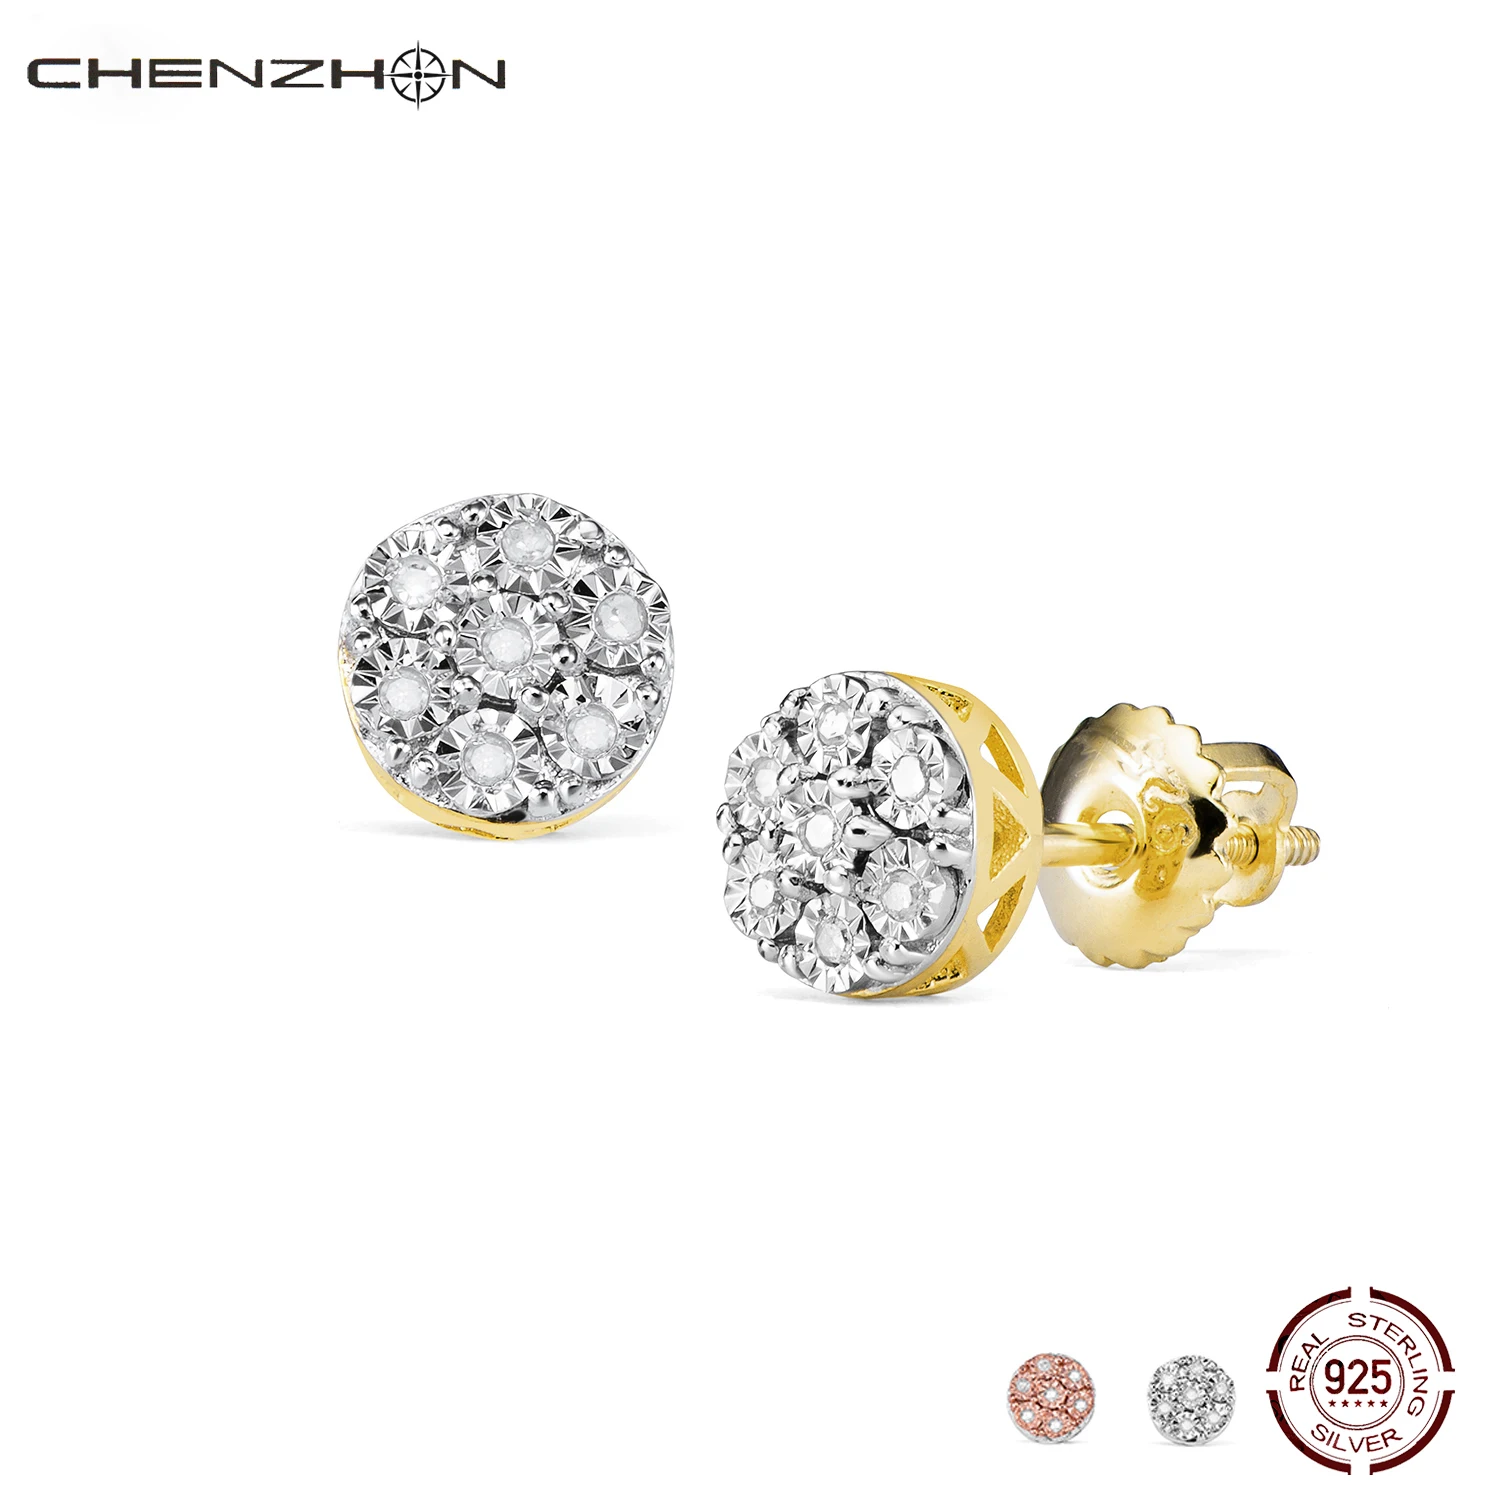 CHENZHON  Diamond Earrings Wedding Ladies Classic Jewelry 925 Sterling Silver  Earrings Gift